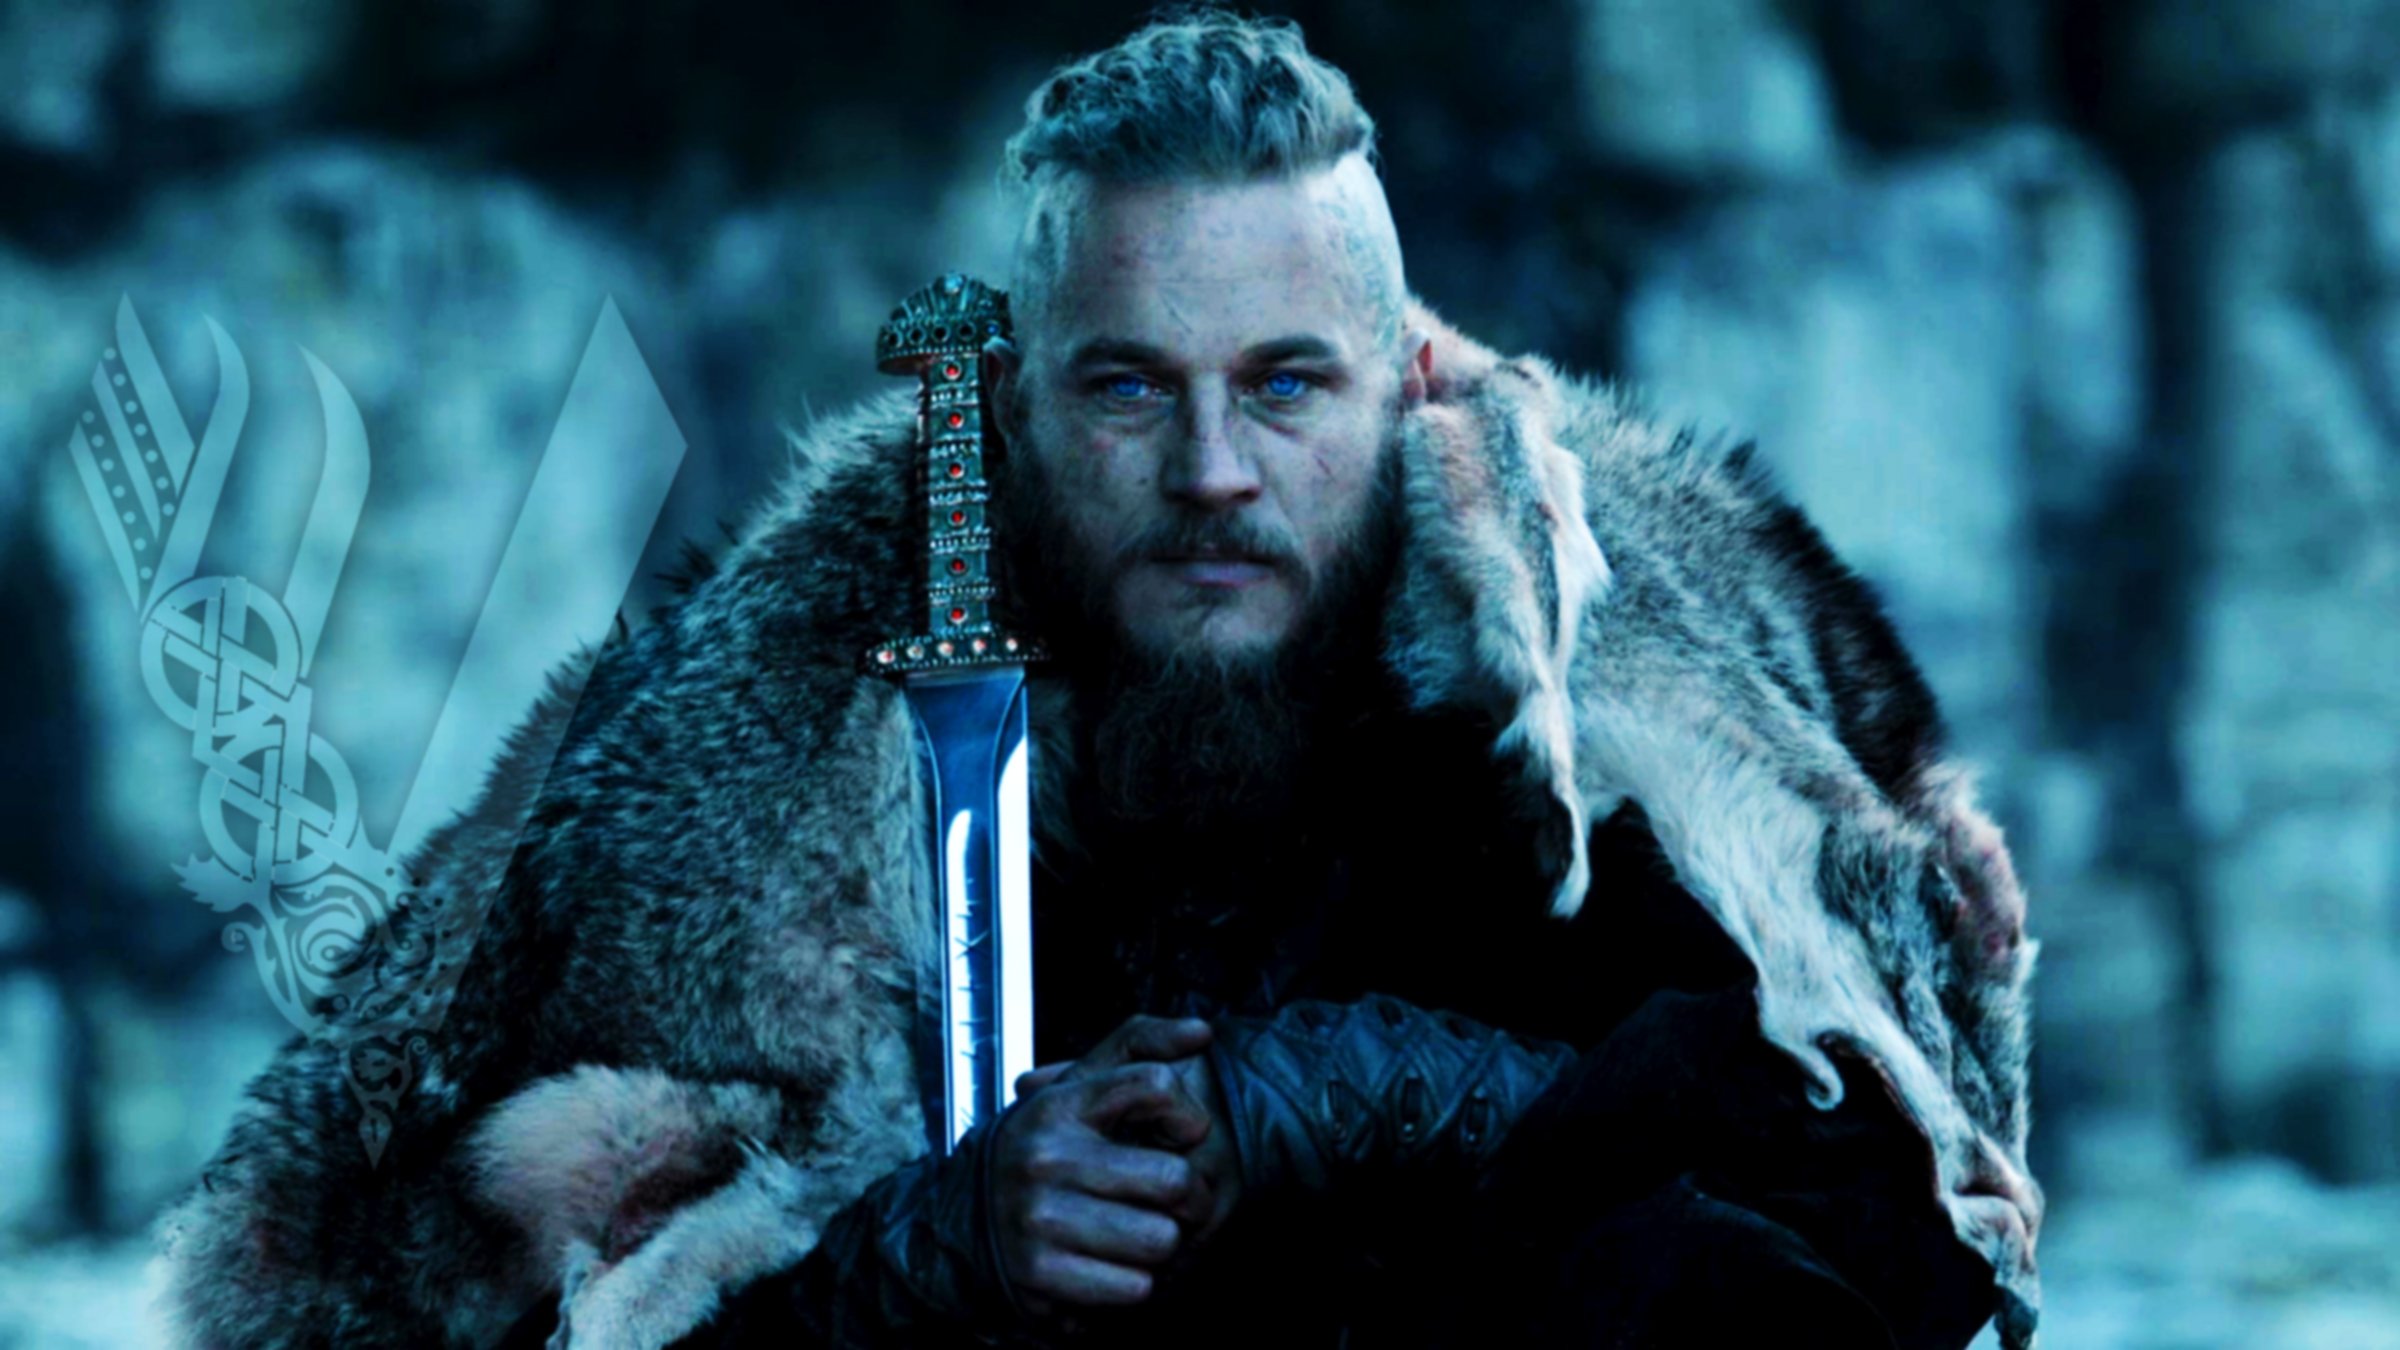 VIKINGS action drama history fantasy adventure series 1vikings viking